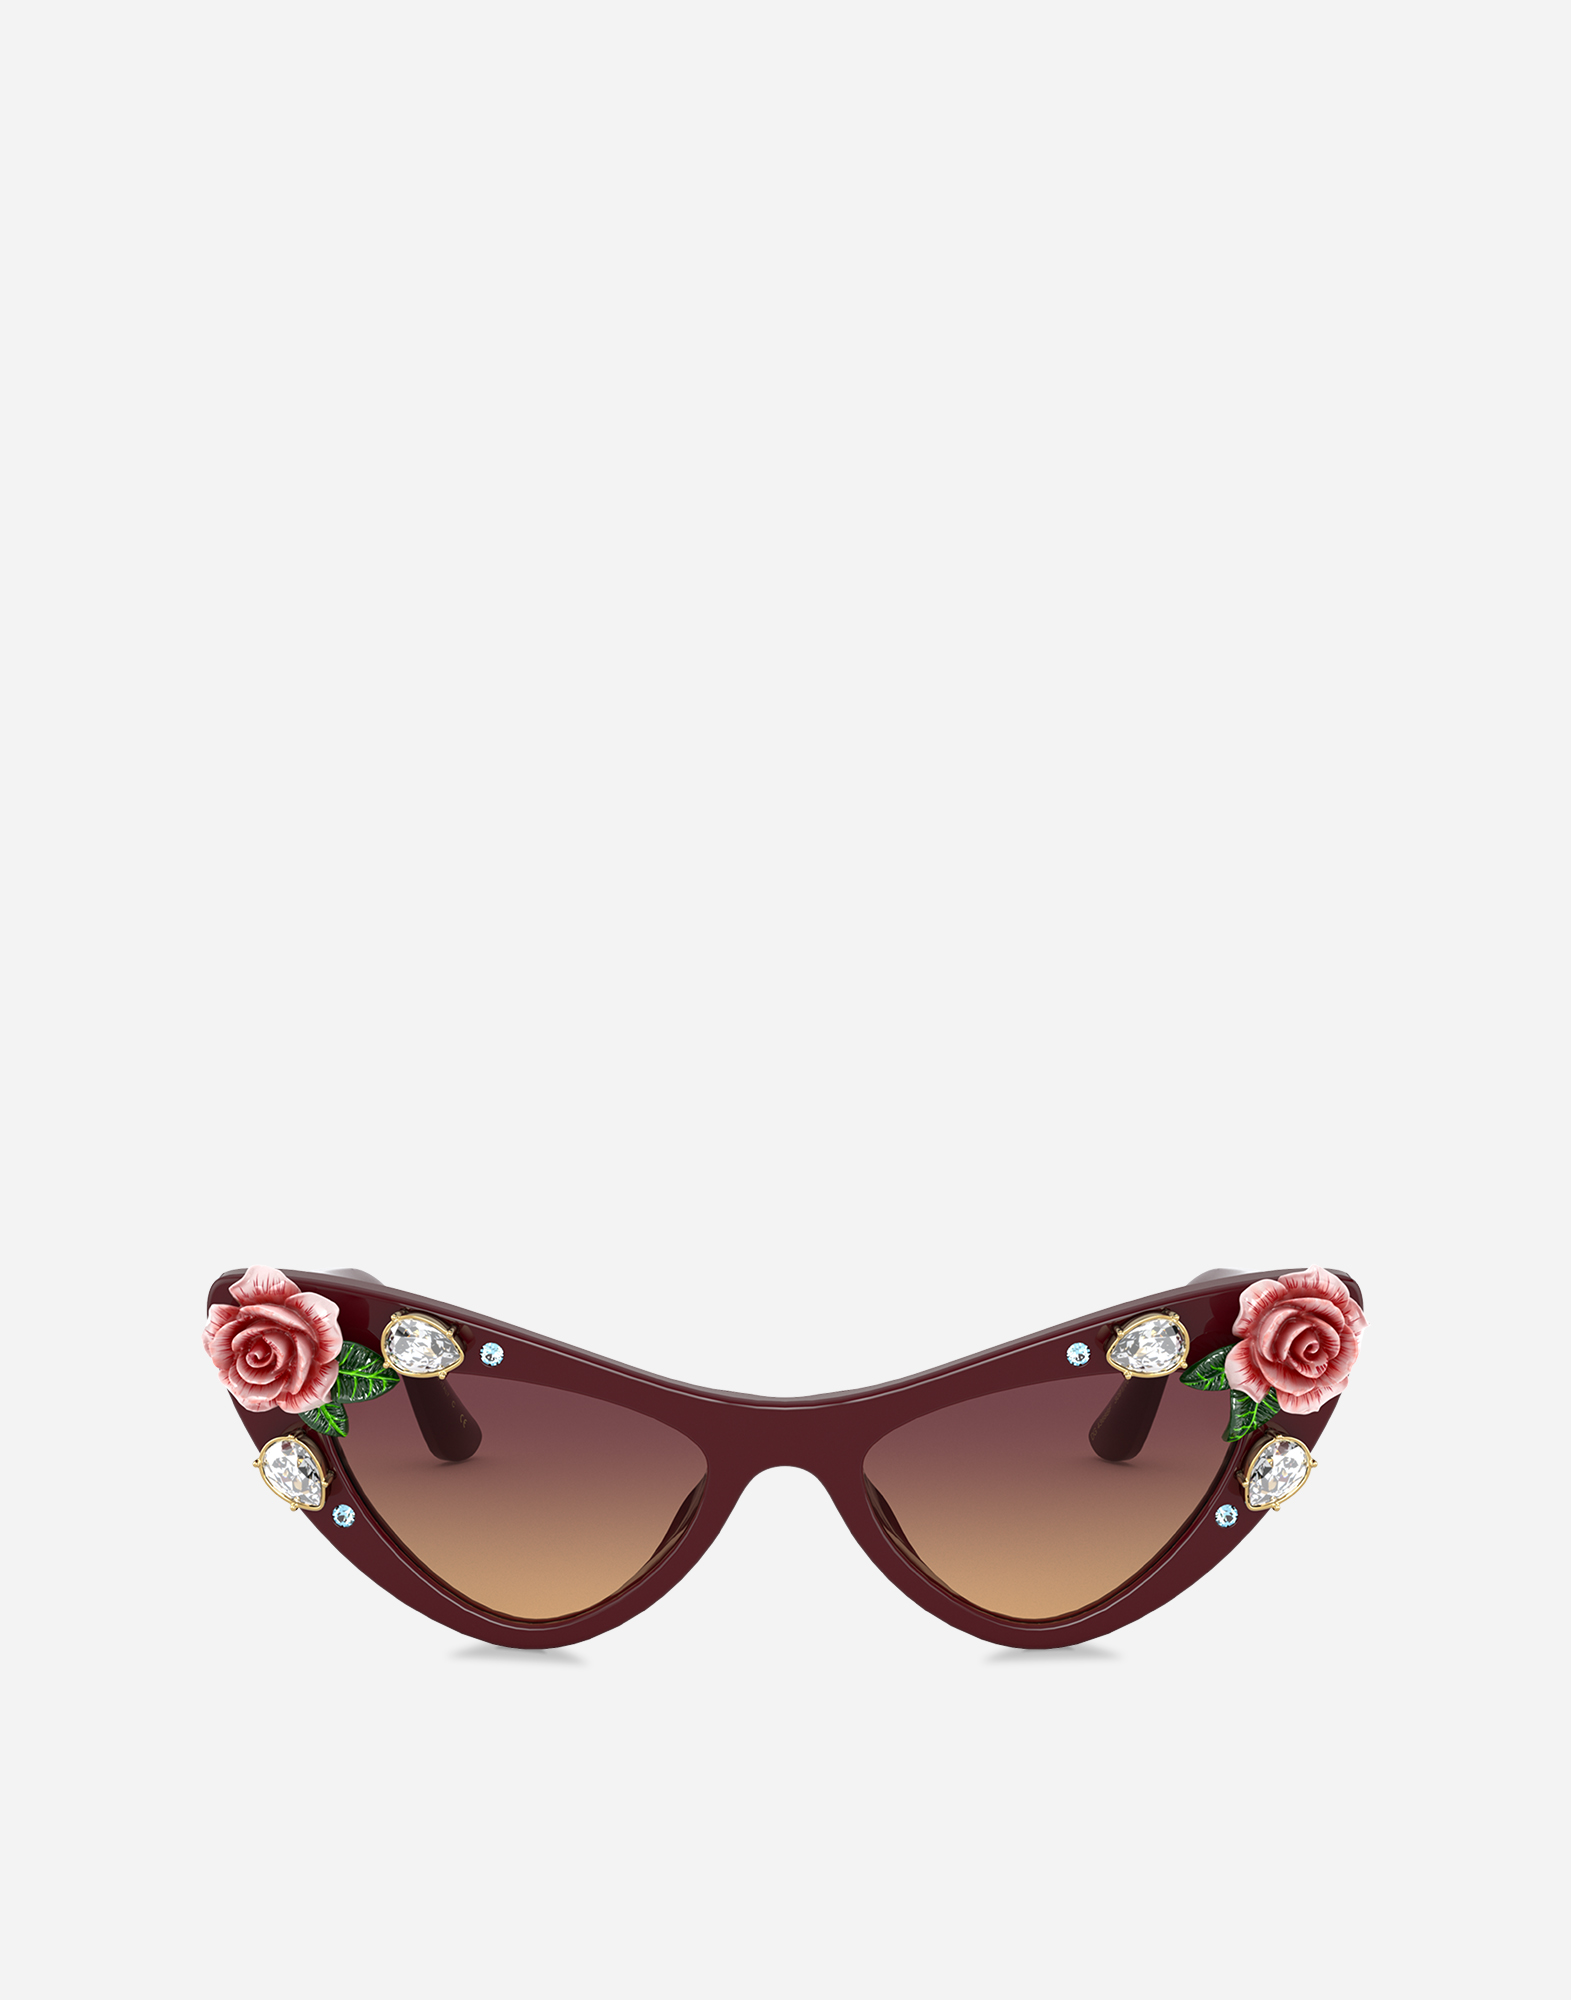 d&g pink sunglasses